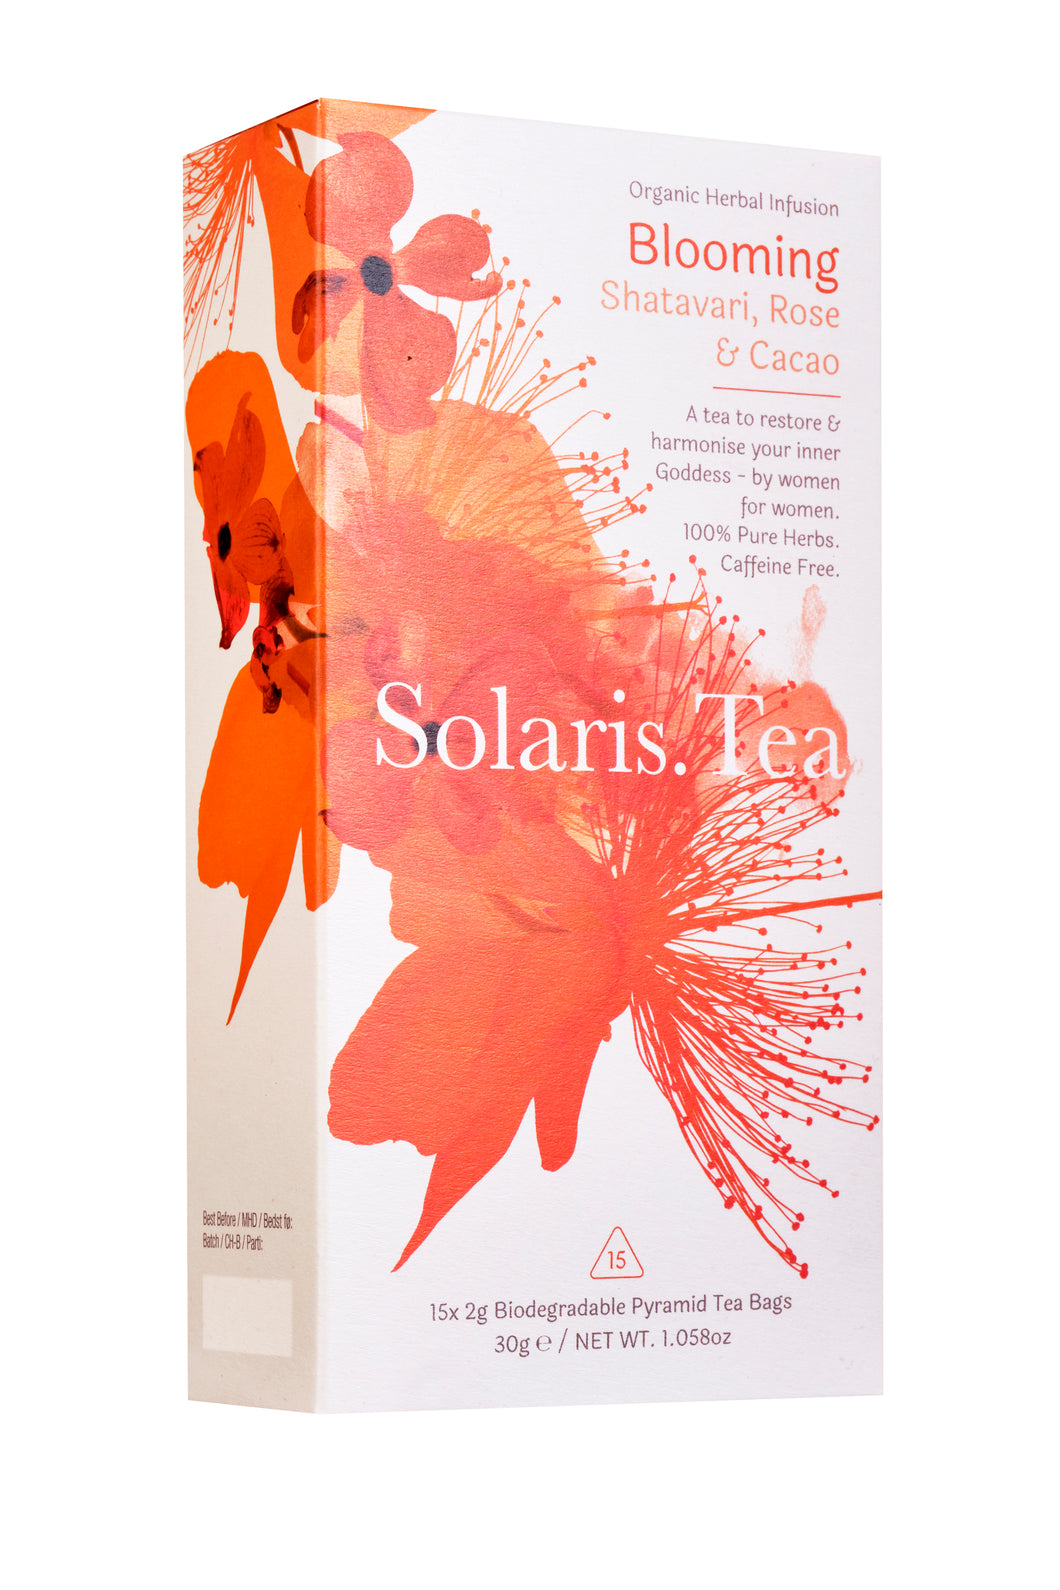 Solaris.Tea - Blooming - Restore & Harmonise | Biologisch abbaubare Pyramiden-Teebeutel, 15x2g BIO